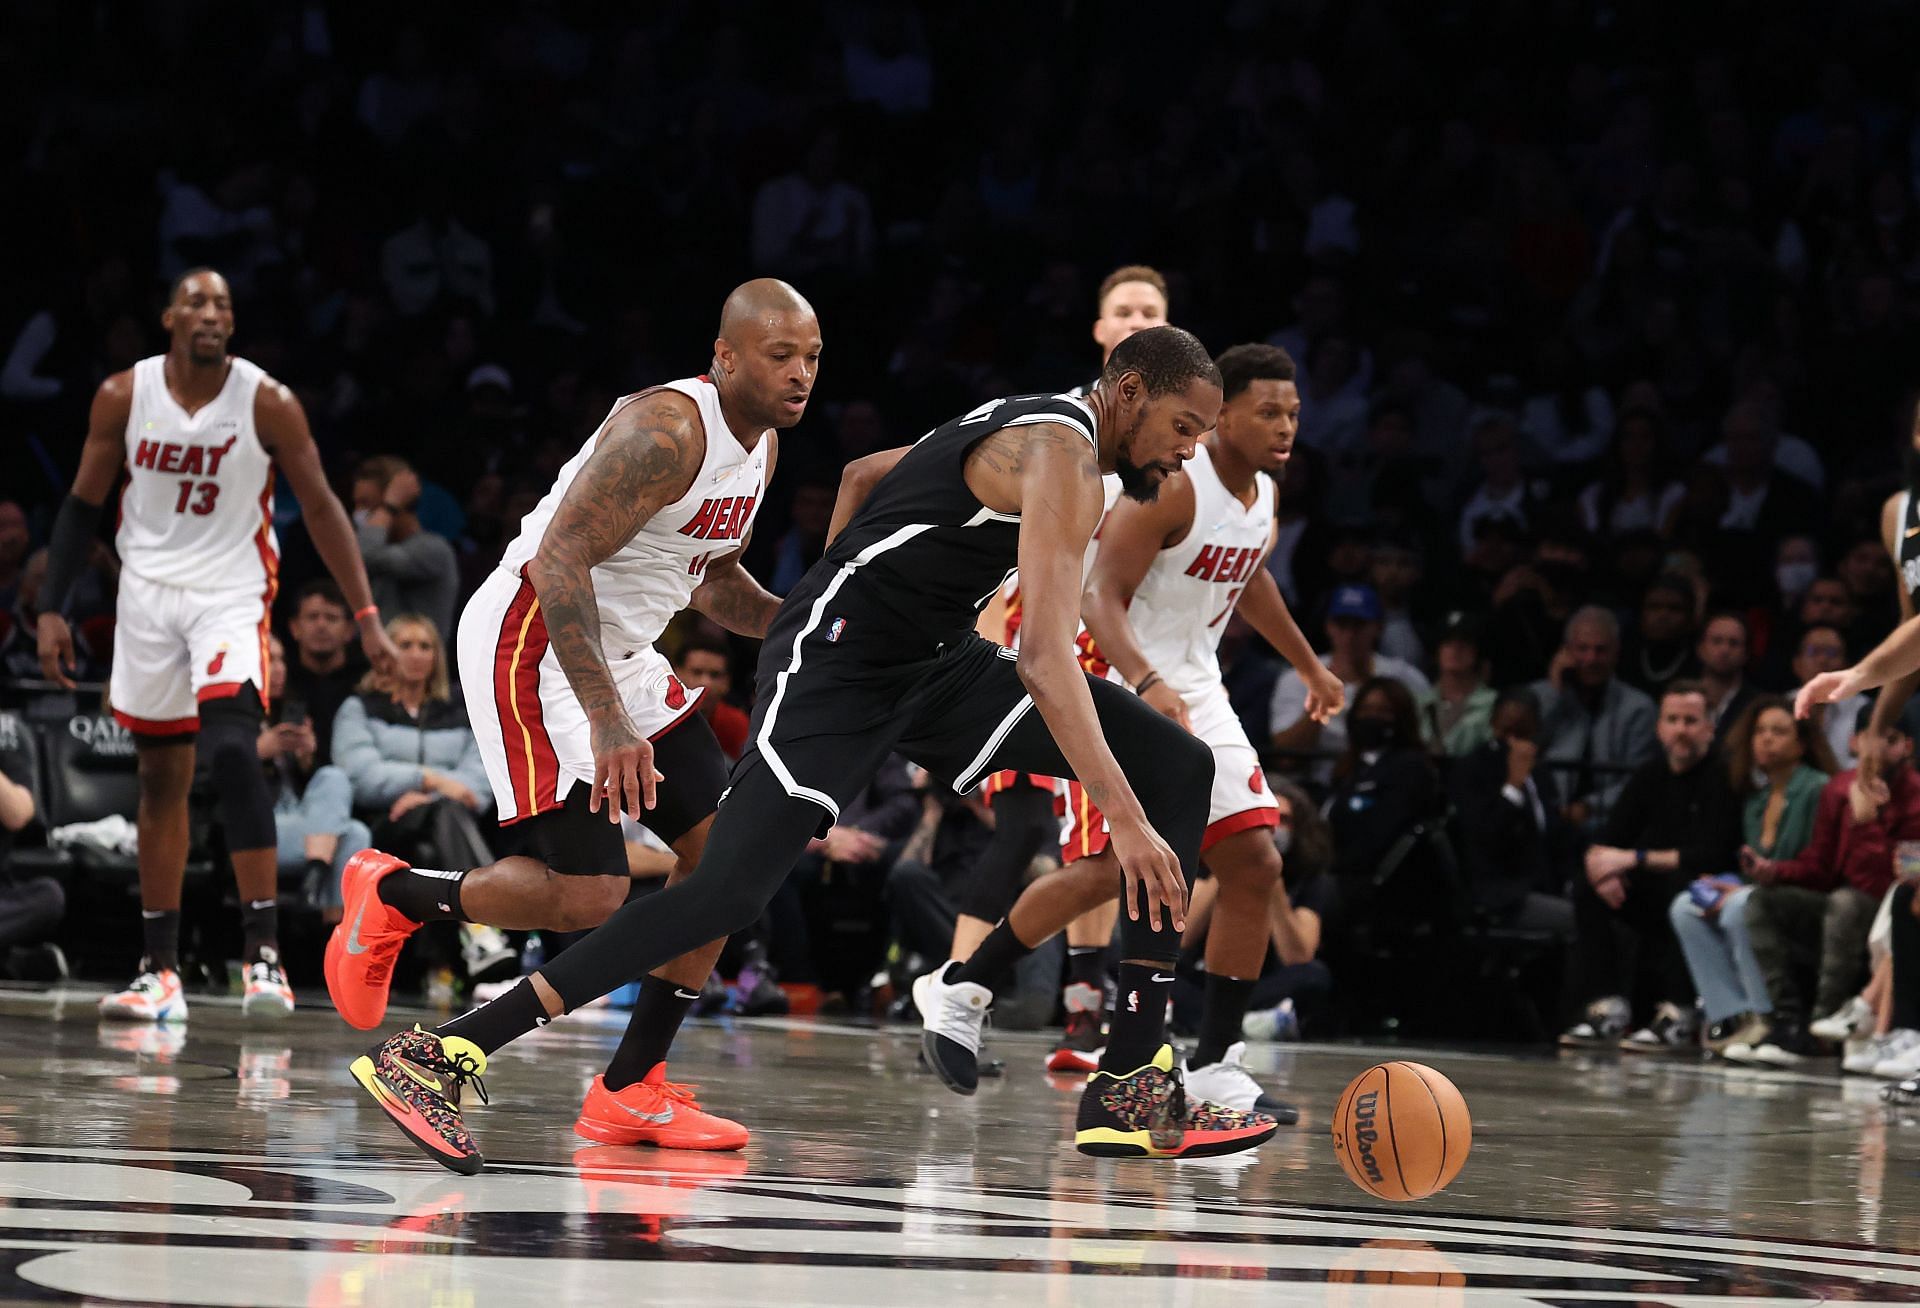 Miami Heat will lock horns with the Brooklyn Nets on Thursday, February 3